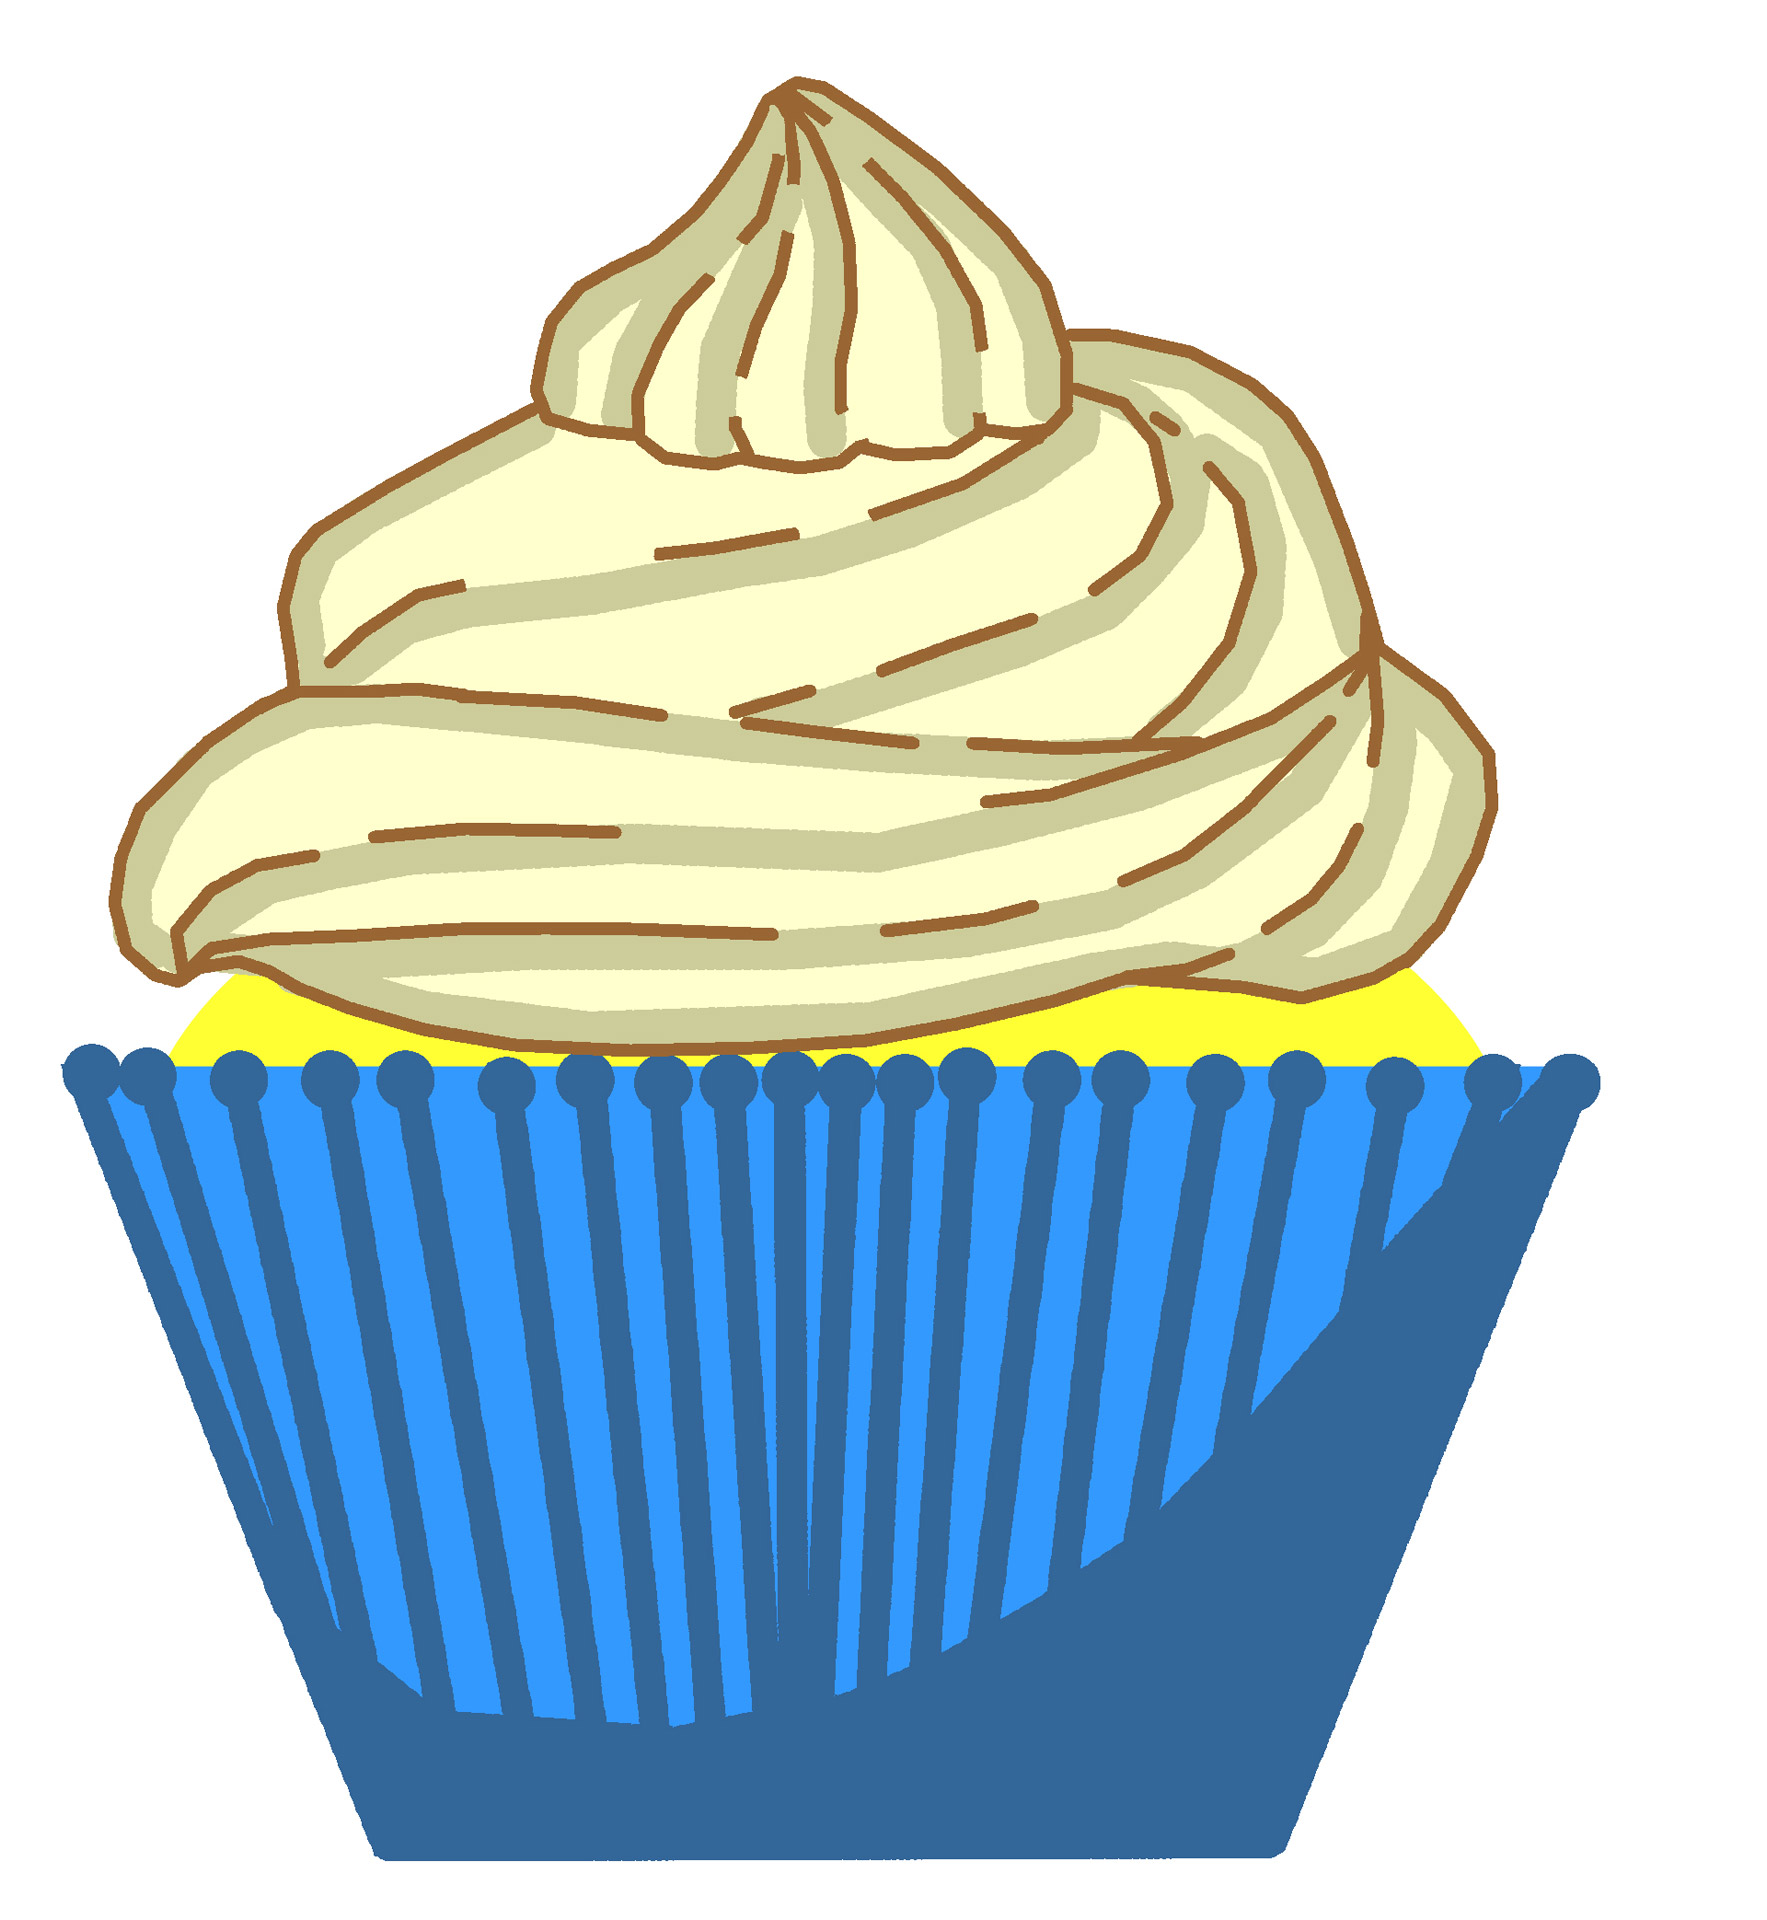 free vector clipart cupcake - photo #39